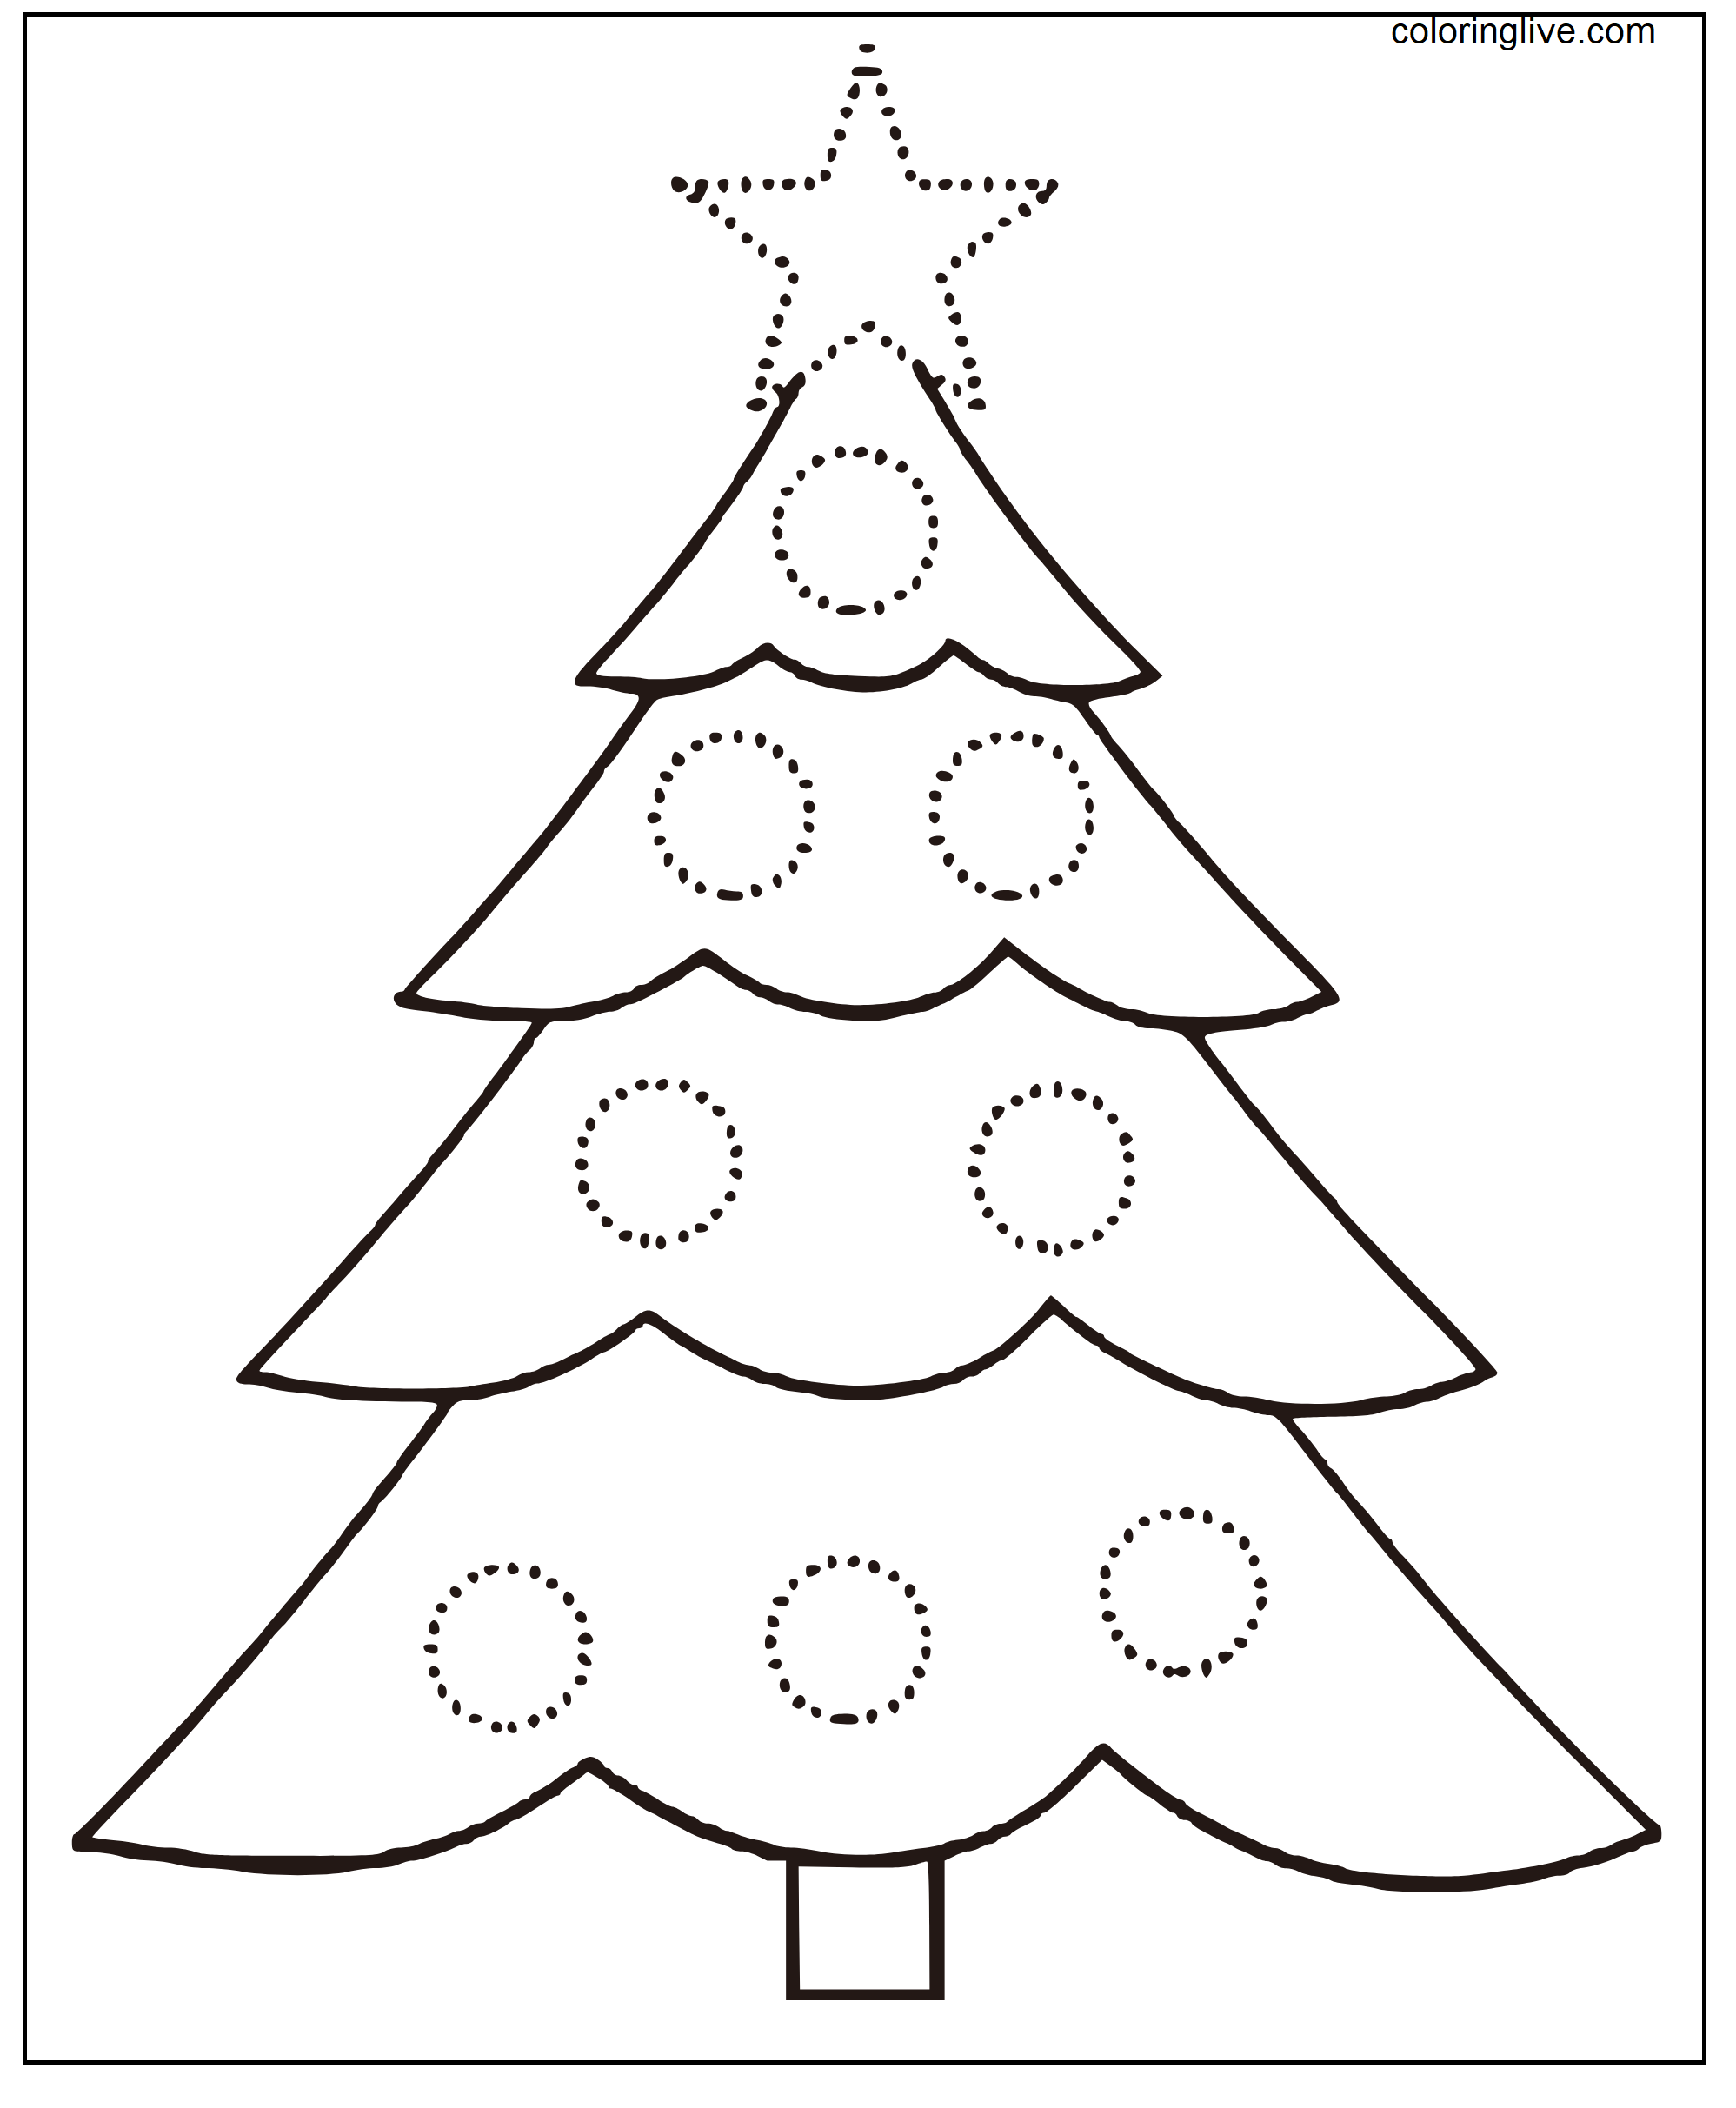 Printable A  christmas tree sheet Coloring Page for kids.